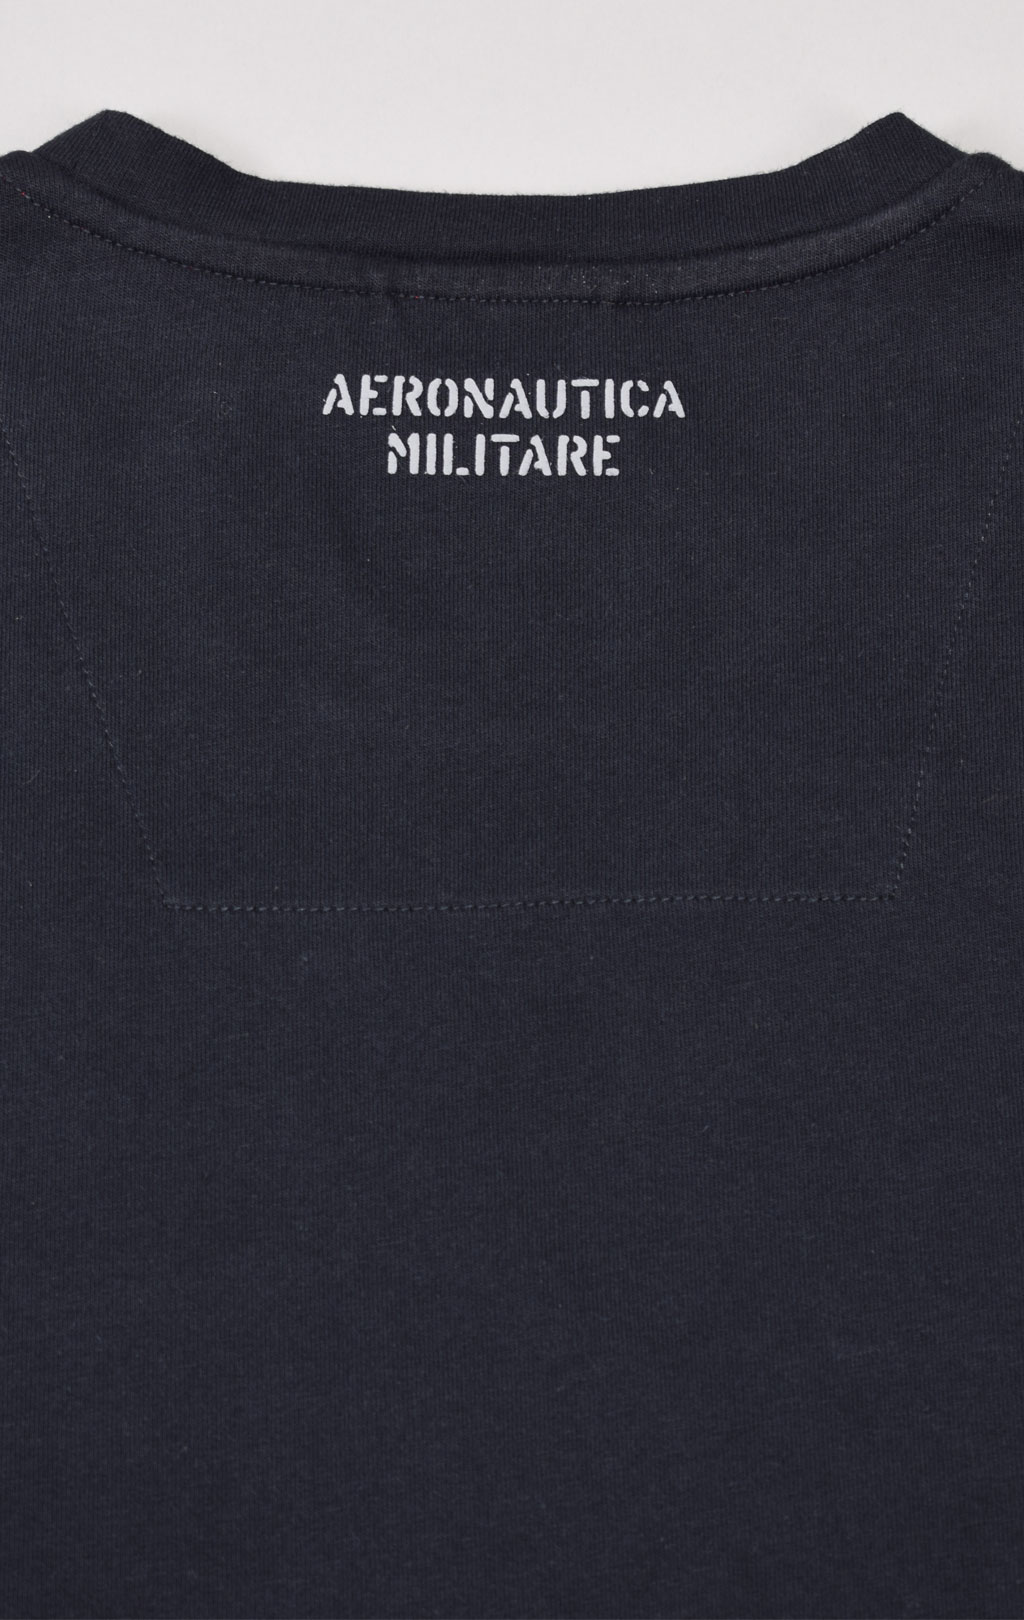 Лонгслив AERONAUTICA MILITARE FW 21/22/TR blue black (TS 1909) 